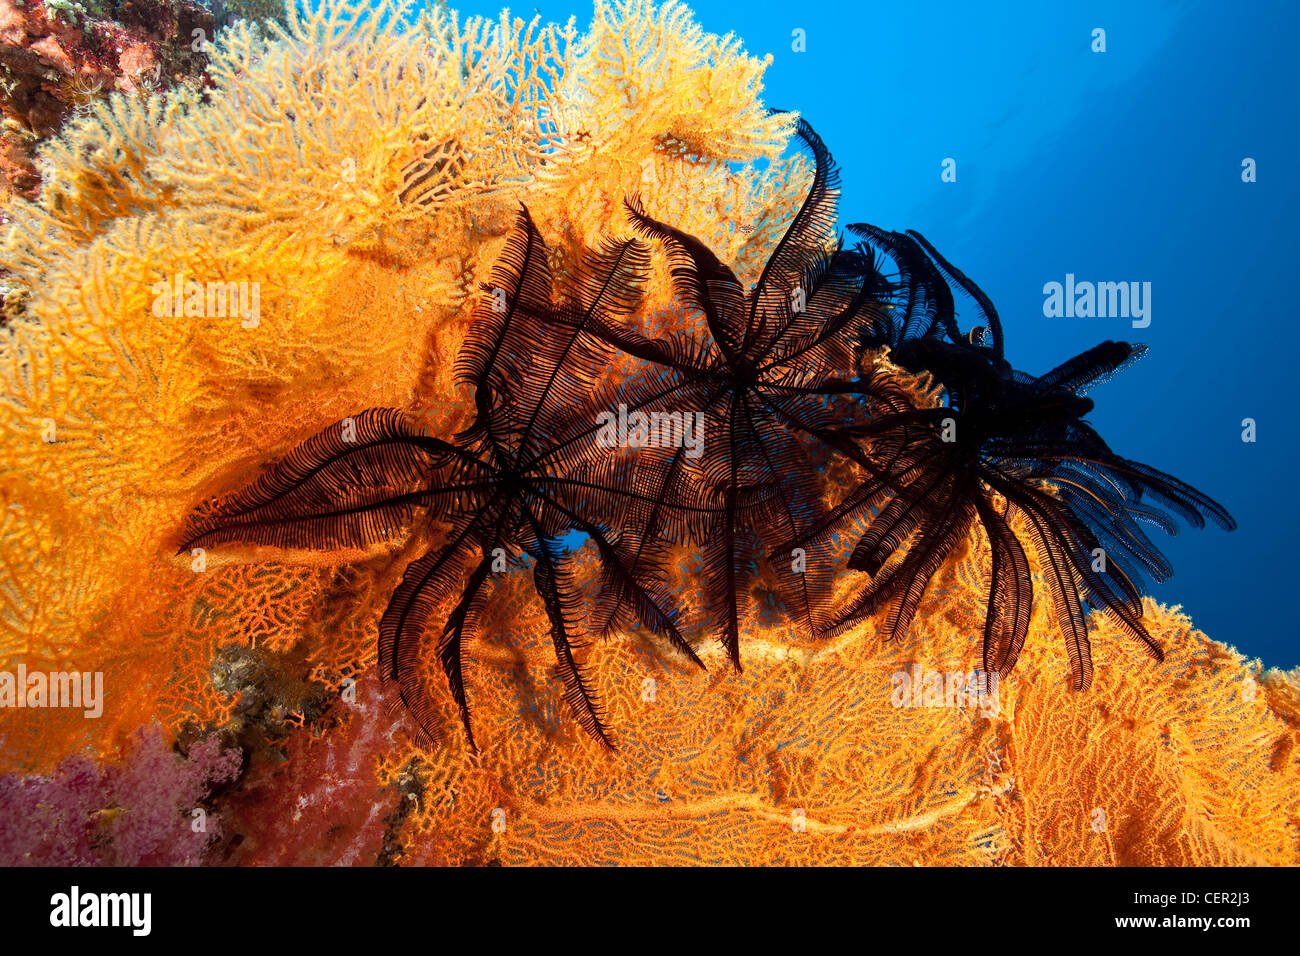 Black Crinoids on Sea Fan, Comanthina sp., Subergorgia mollis, Tubbataha Reef, Sulu Sea, Philippines Stock Photo